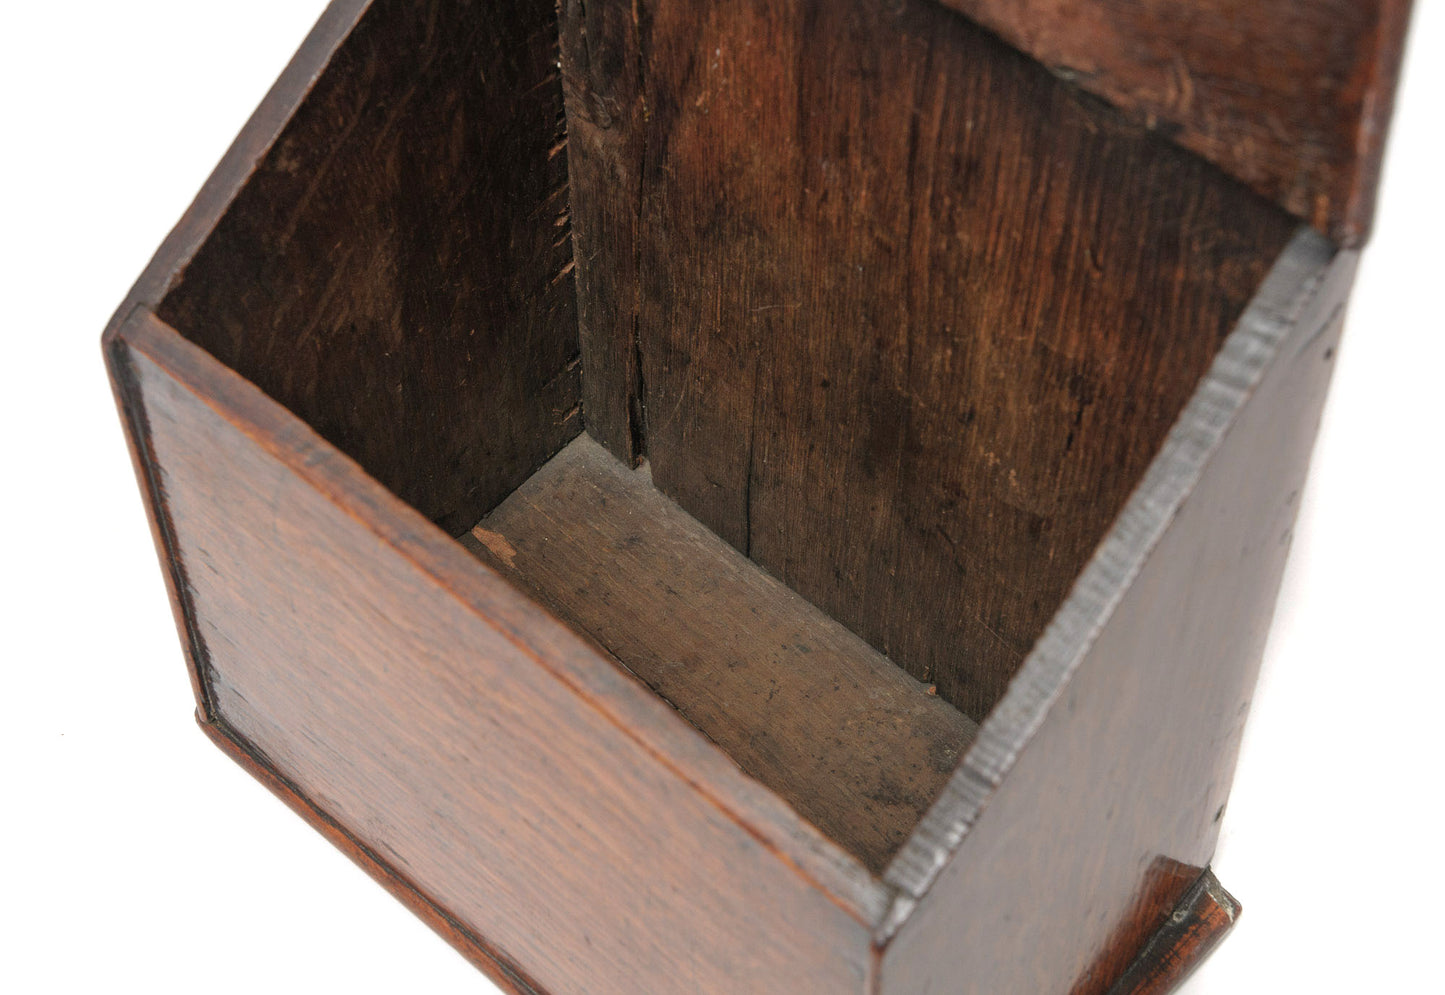 Georgian Antique English Provincial Oak Wood Salt Box with Hinged Lid (Code 1069)